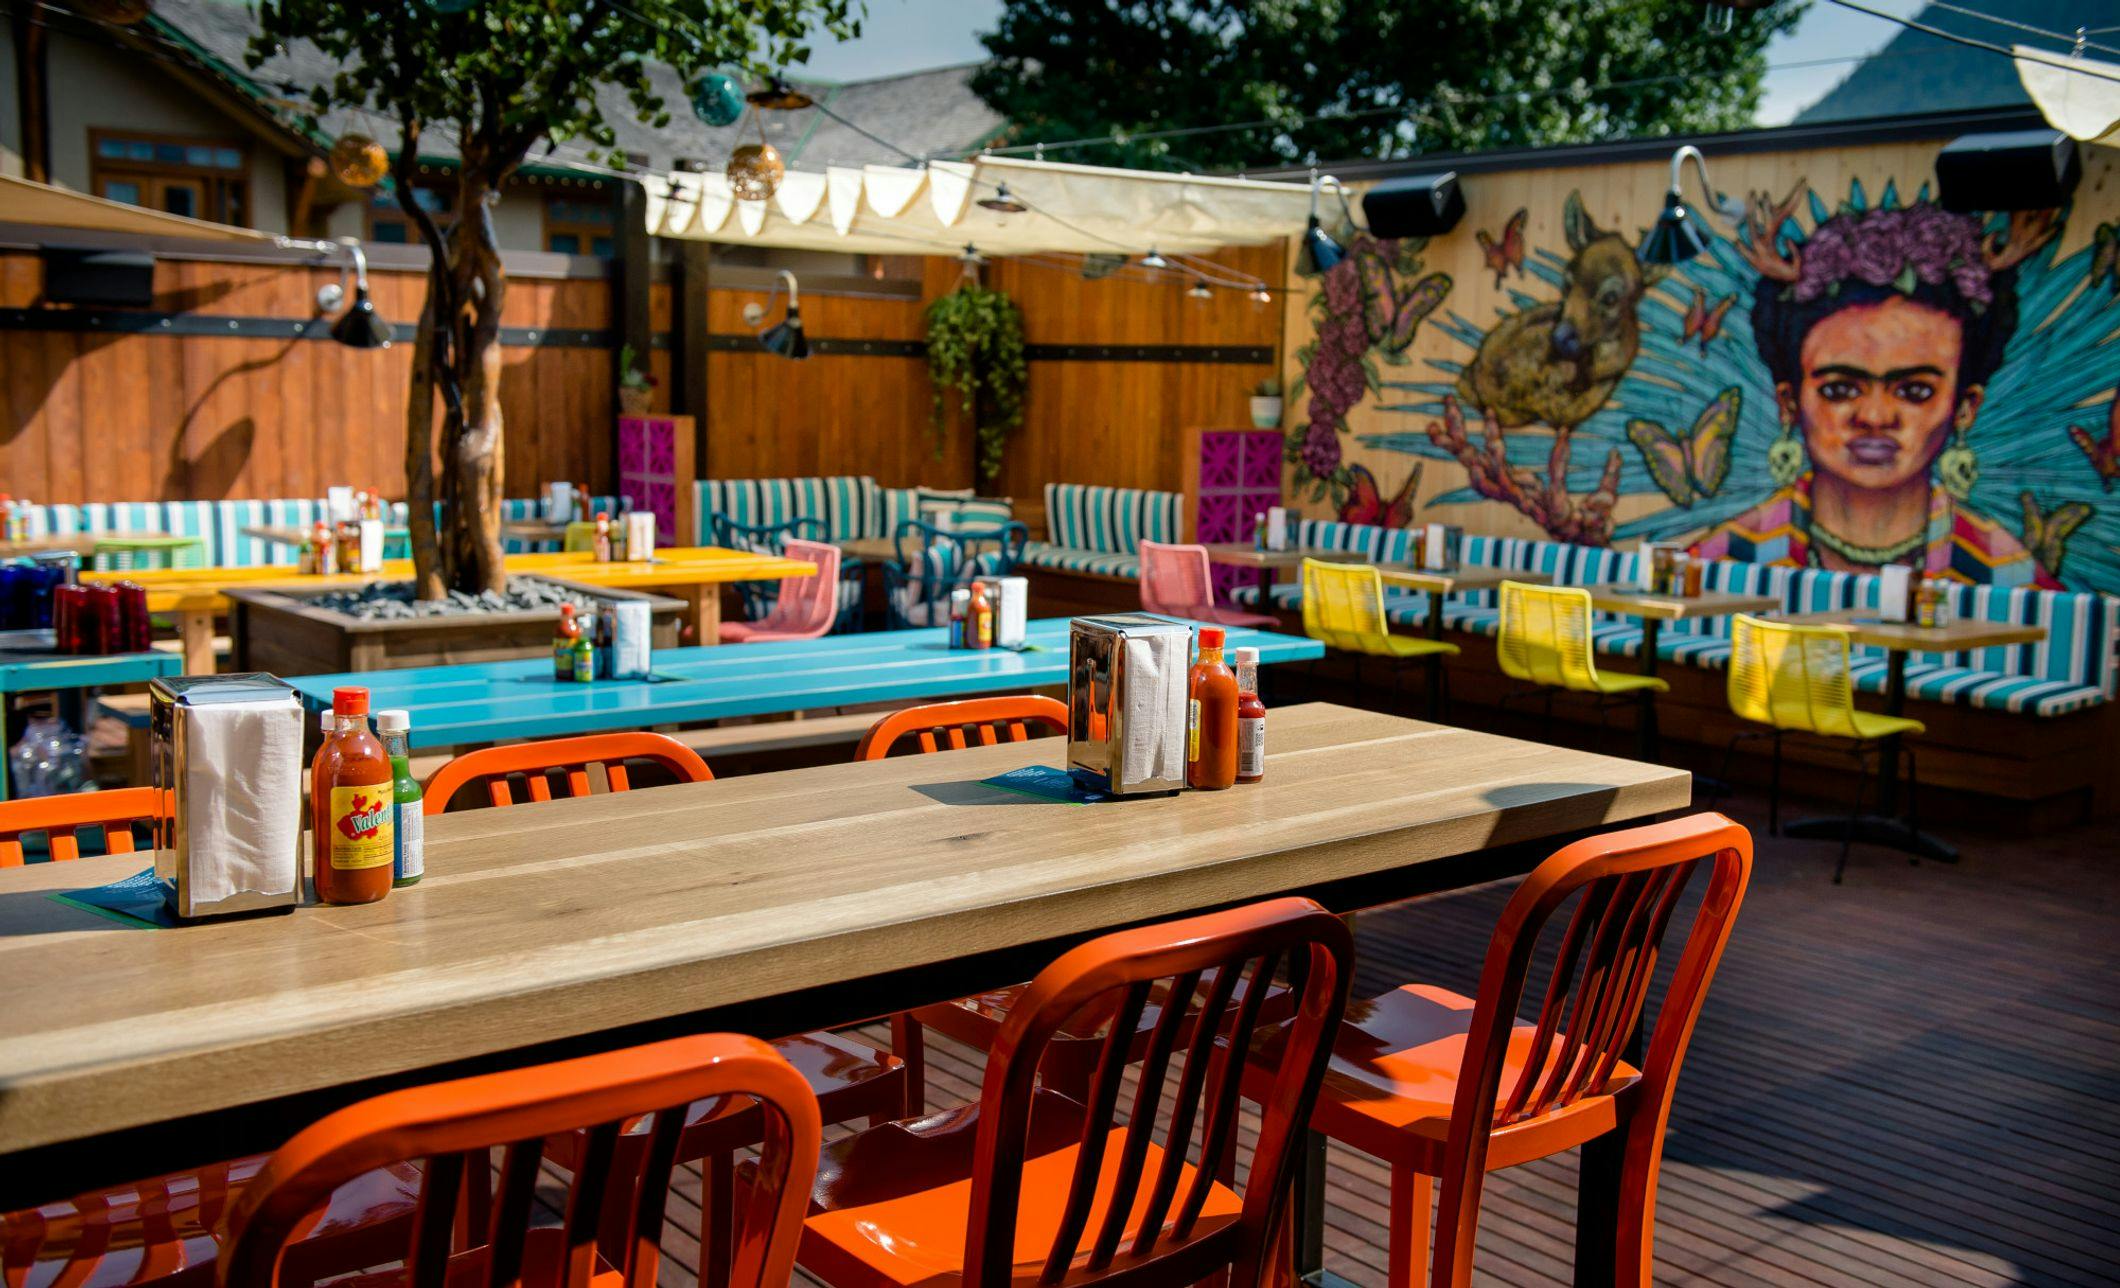 Summer rooftop patio - El Patio - Food &amp; Beverage - Dining - Restaurant